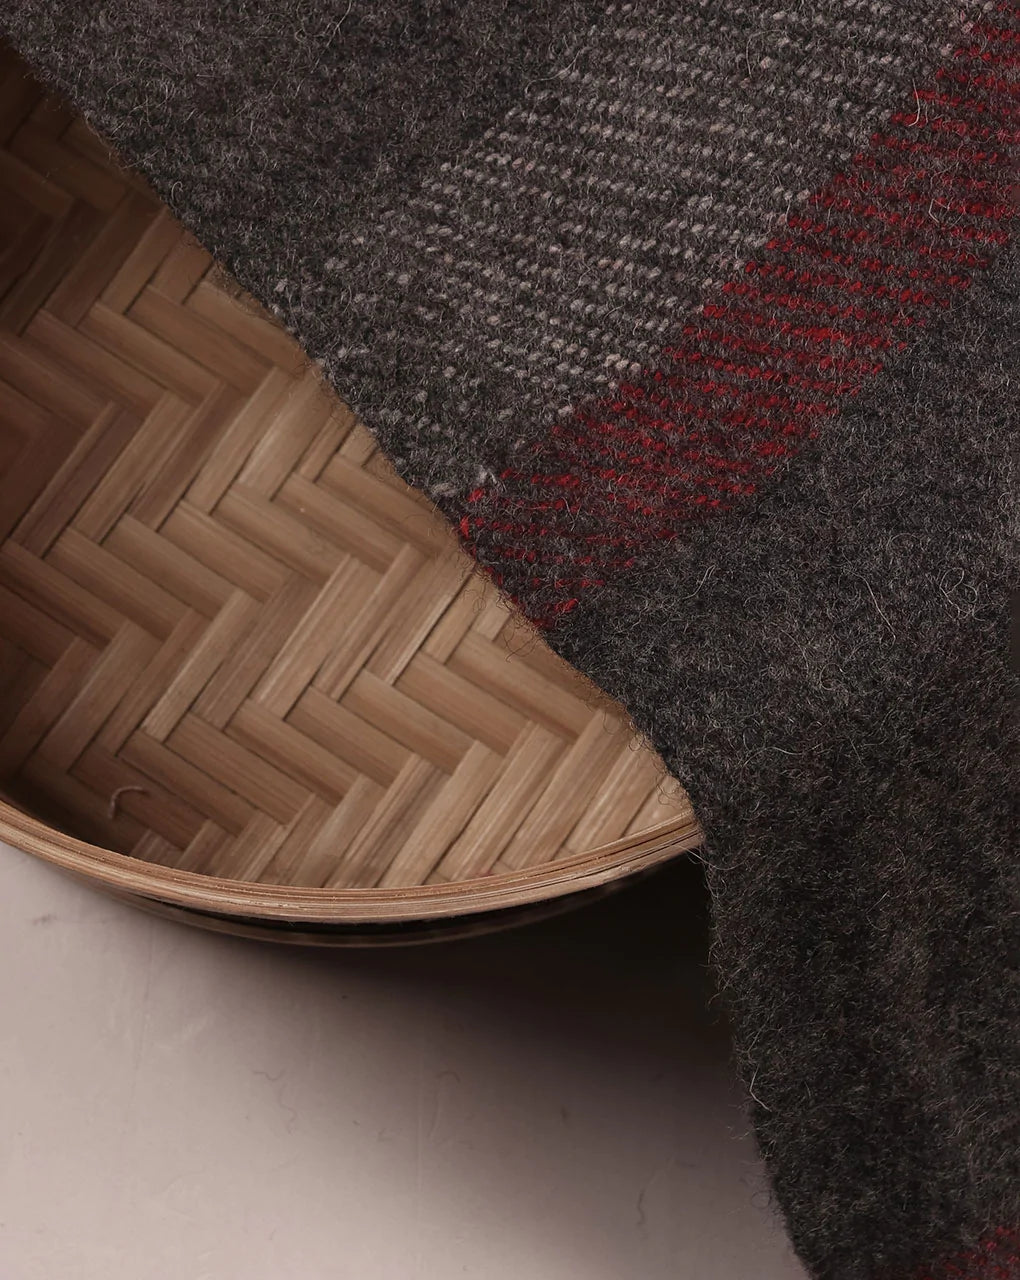 Tartan Checks Woolen Tweed Fabric - Fabriclore.com